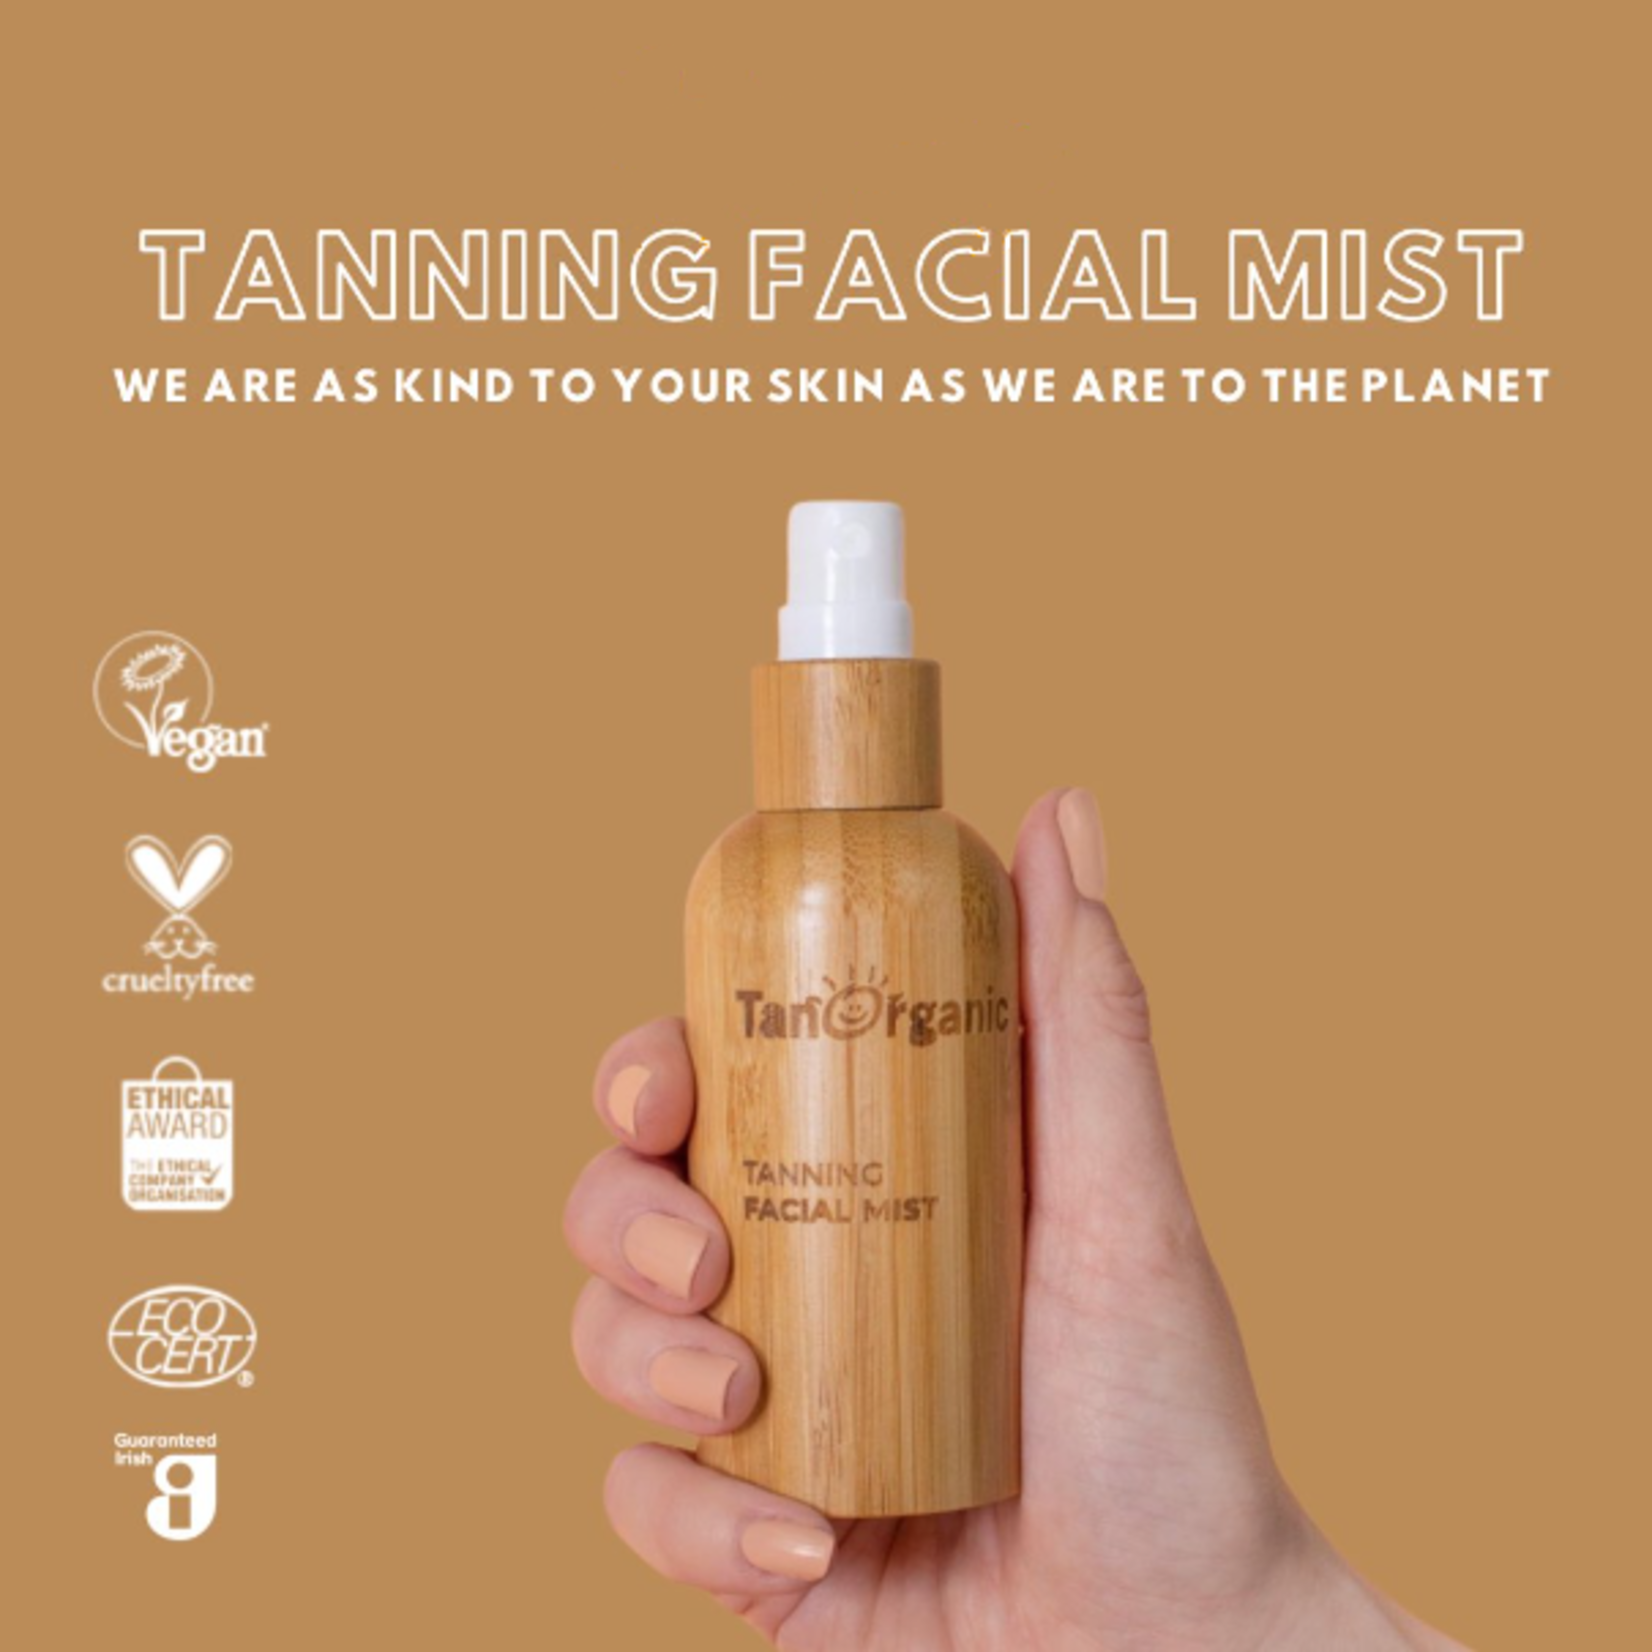 Tan Organic TanOrganic Self Tan Facial Mist - 50ml